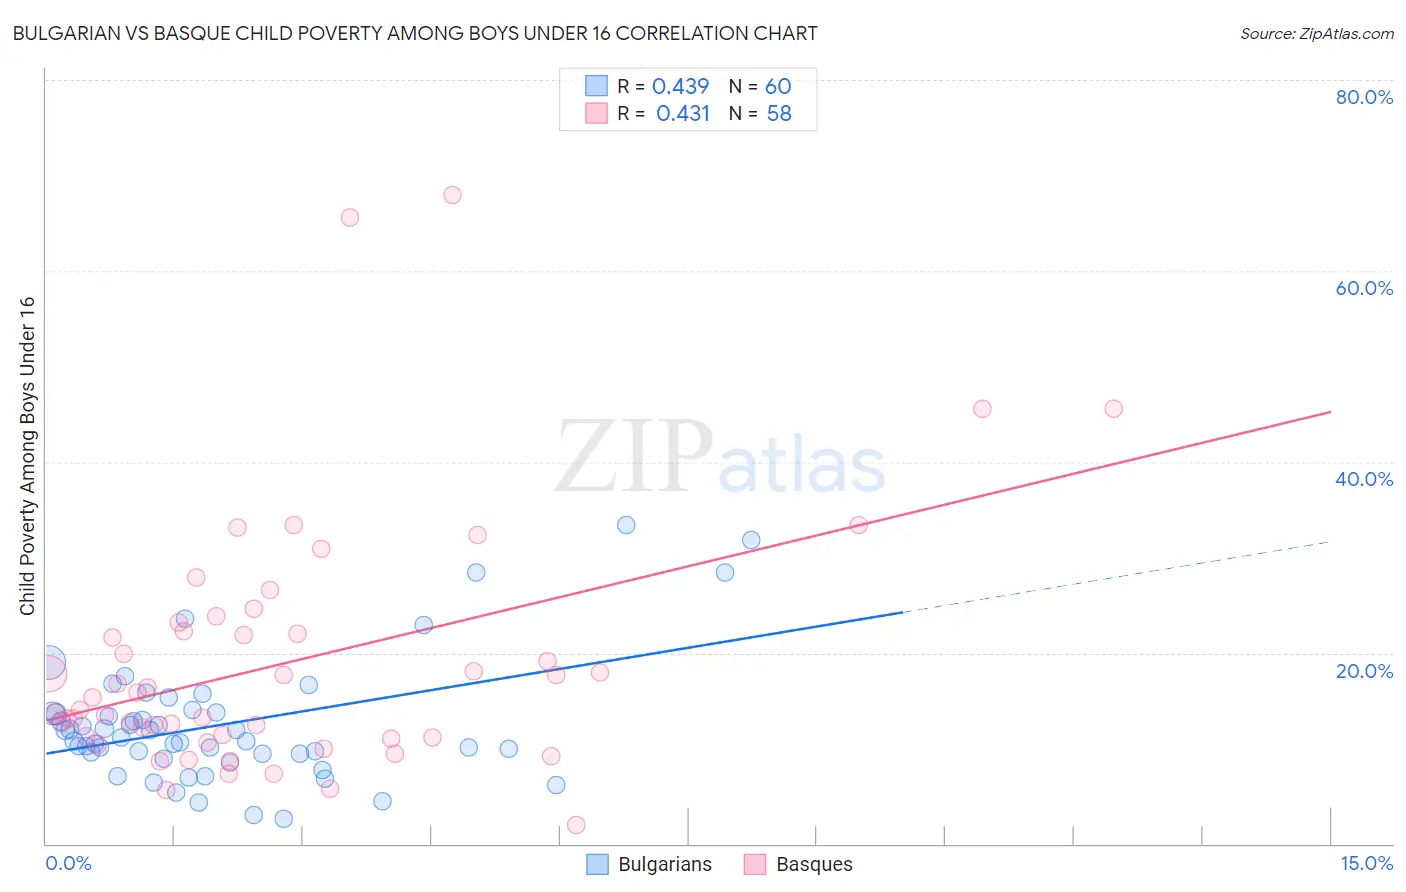 Bulgarian vs Basque Child Poverty Among Boys Under 16